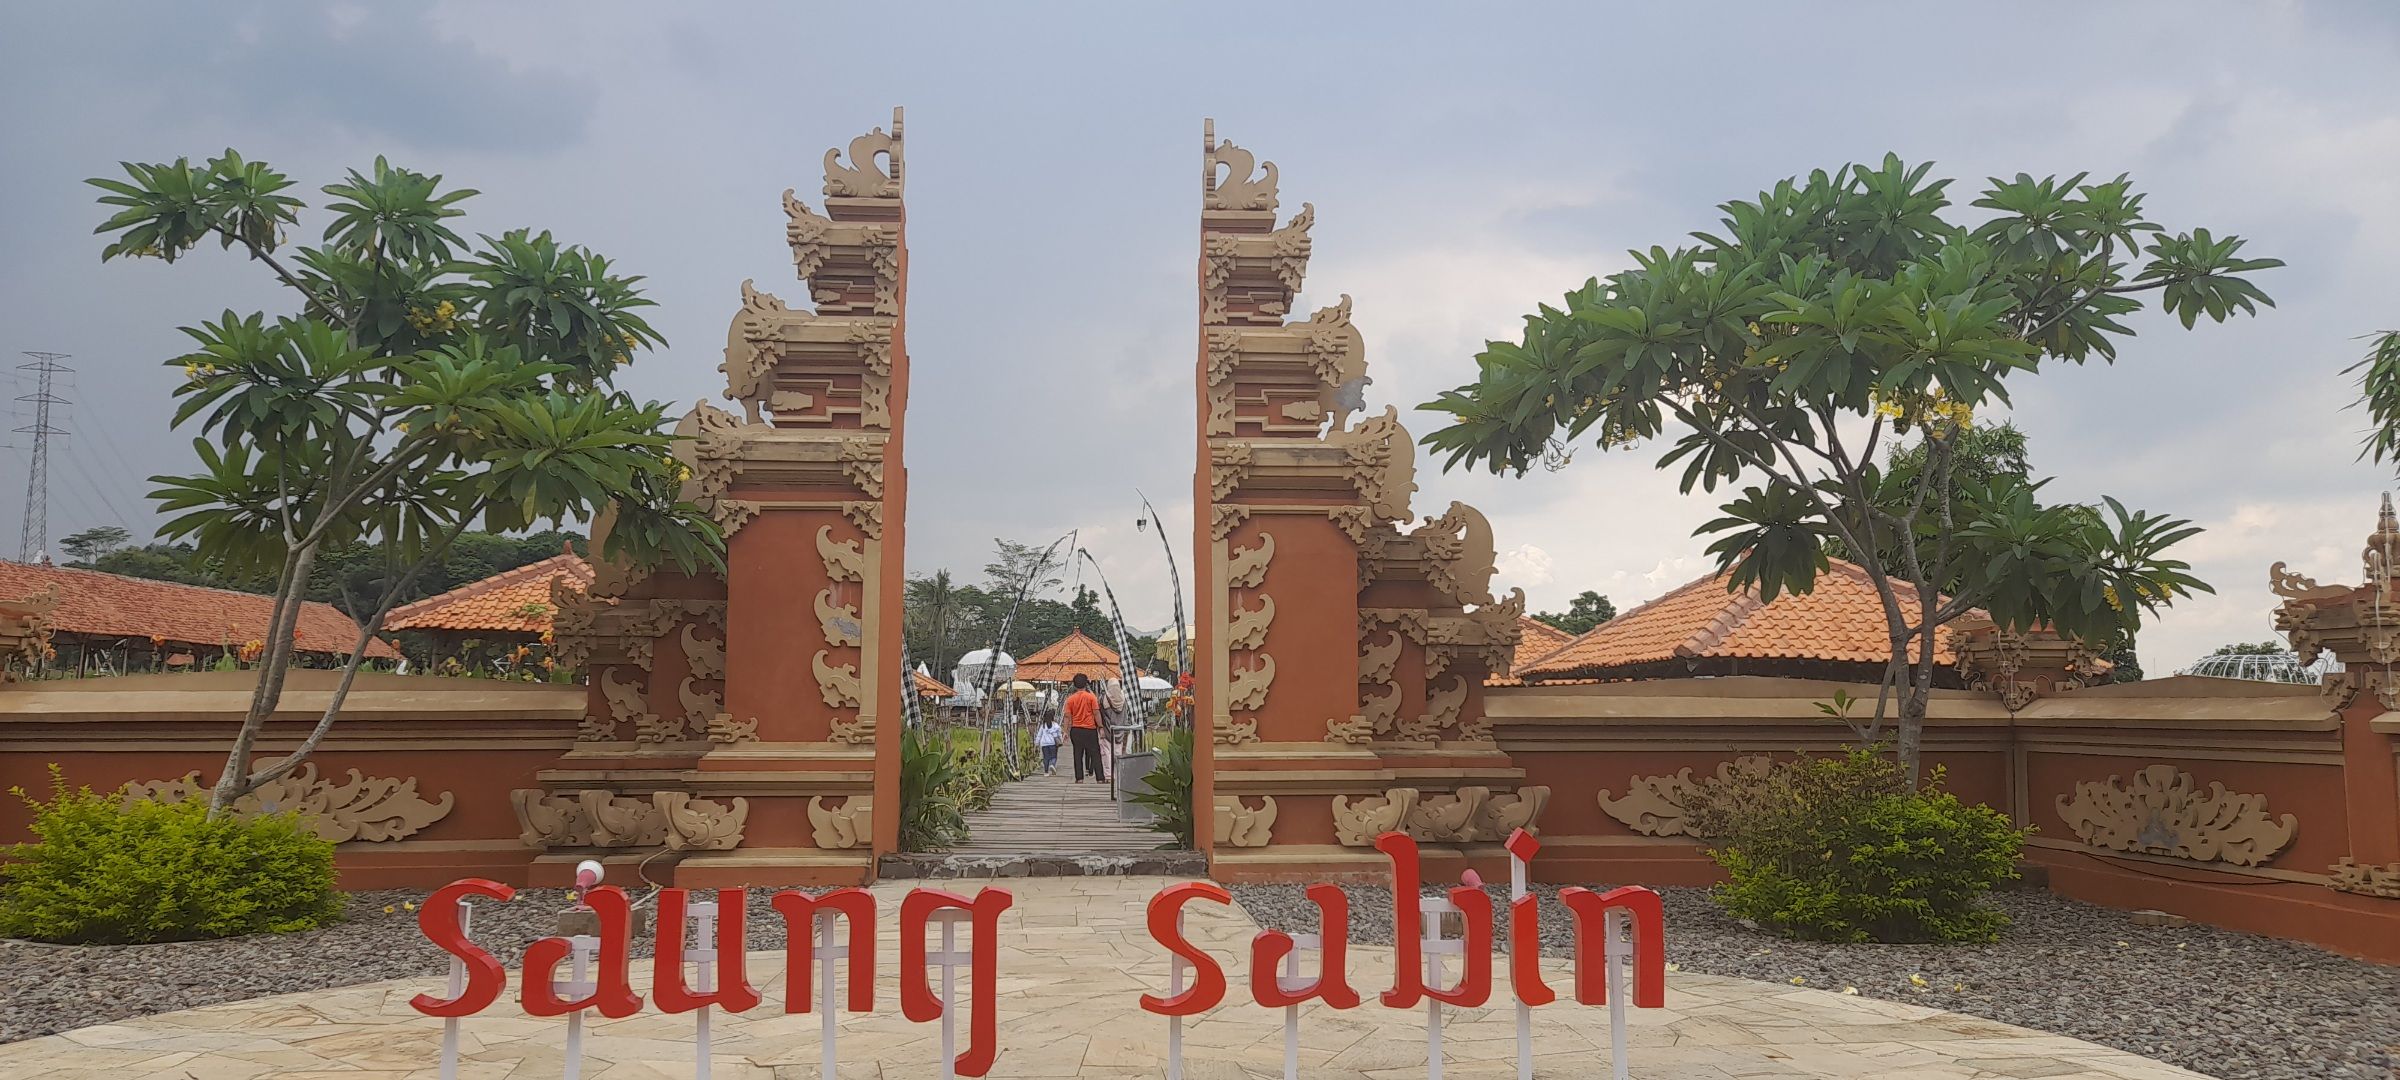 Objek wisata Saung Sabin